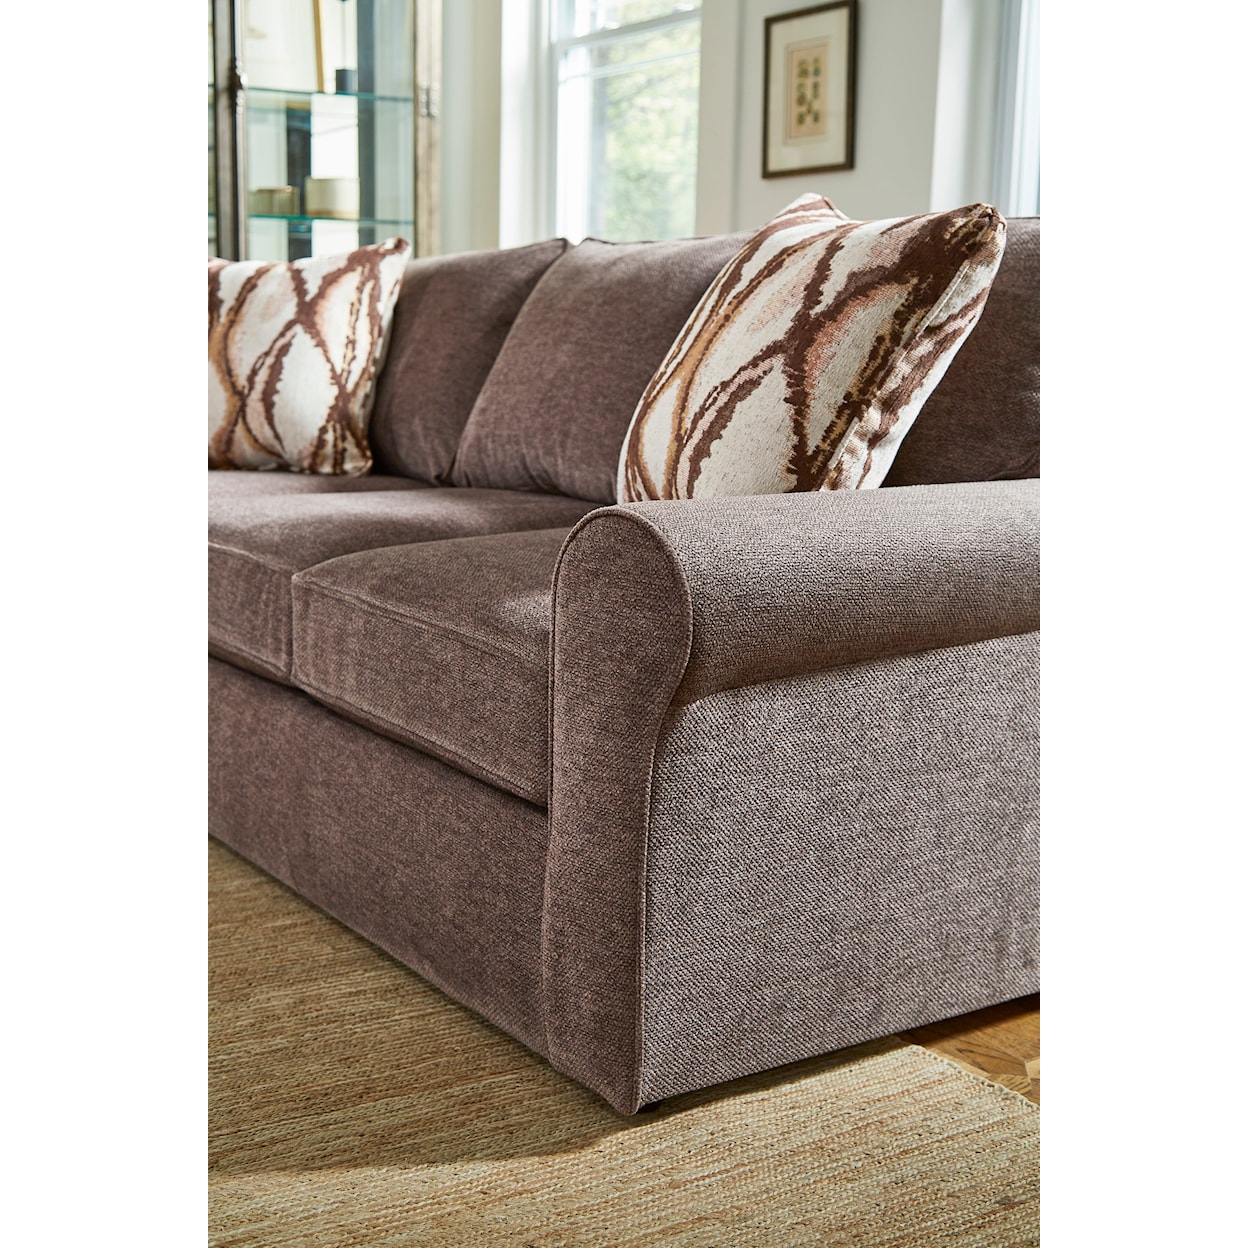 Bravo Furniture Hanway Queen Sleeper Sofa w/ Memory Foam Mattress